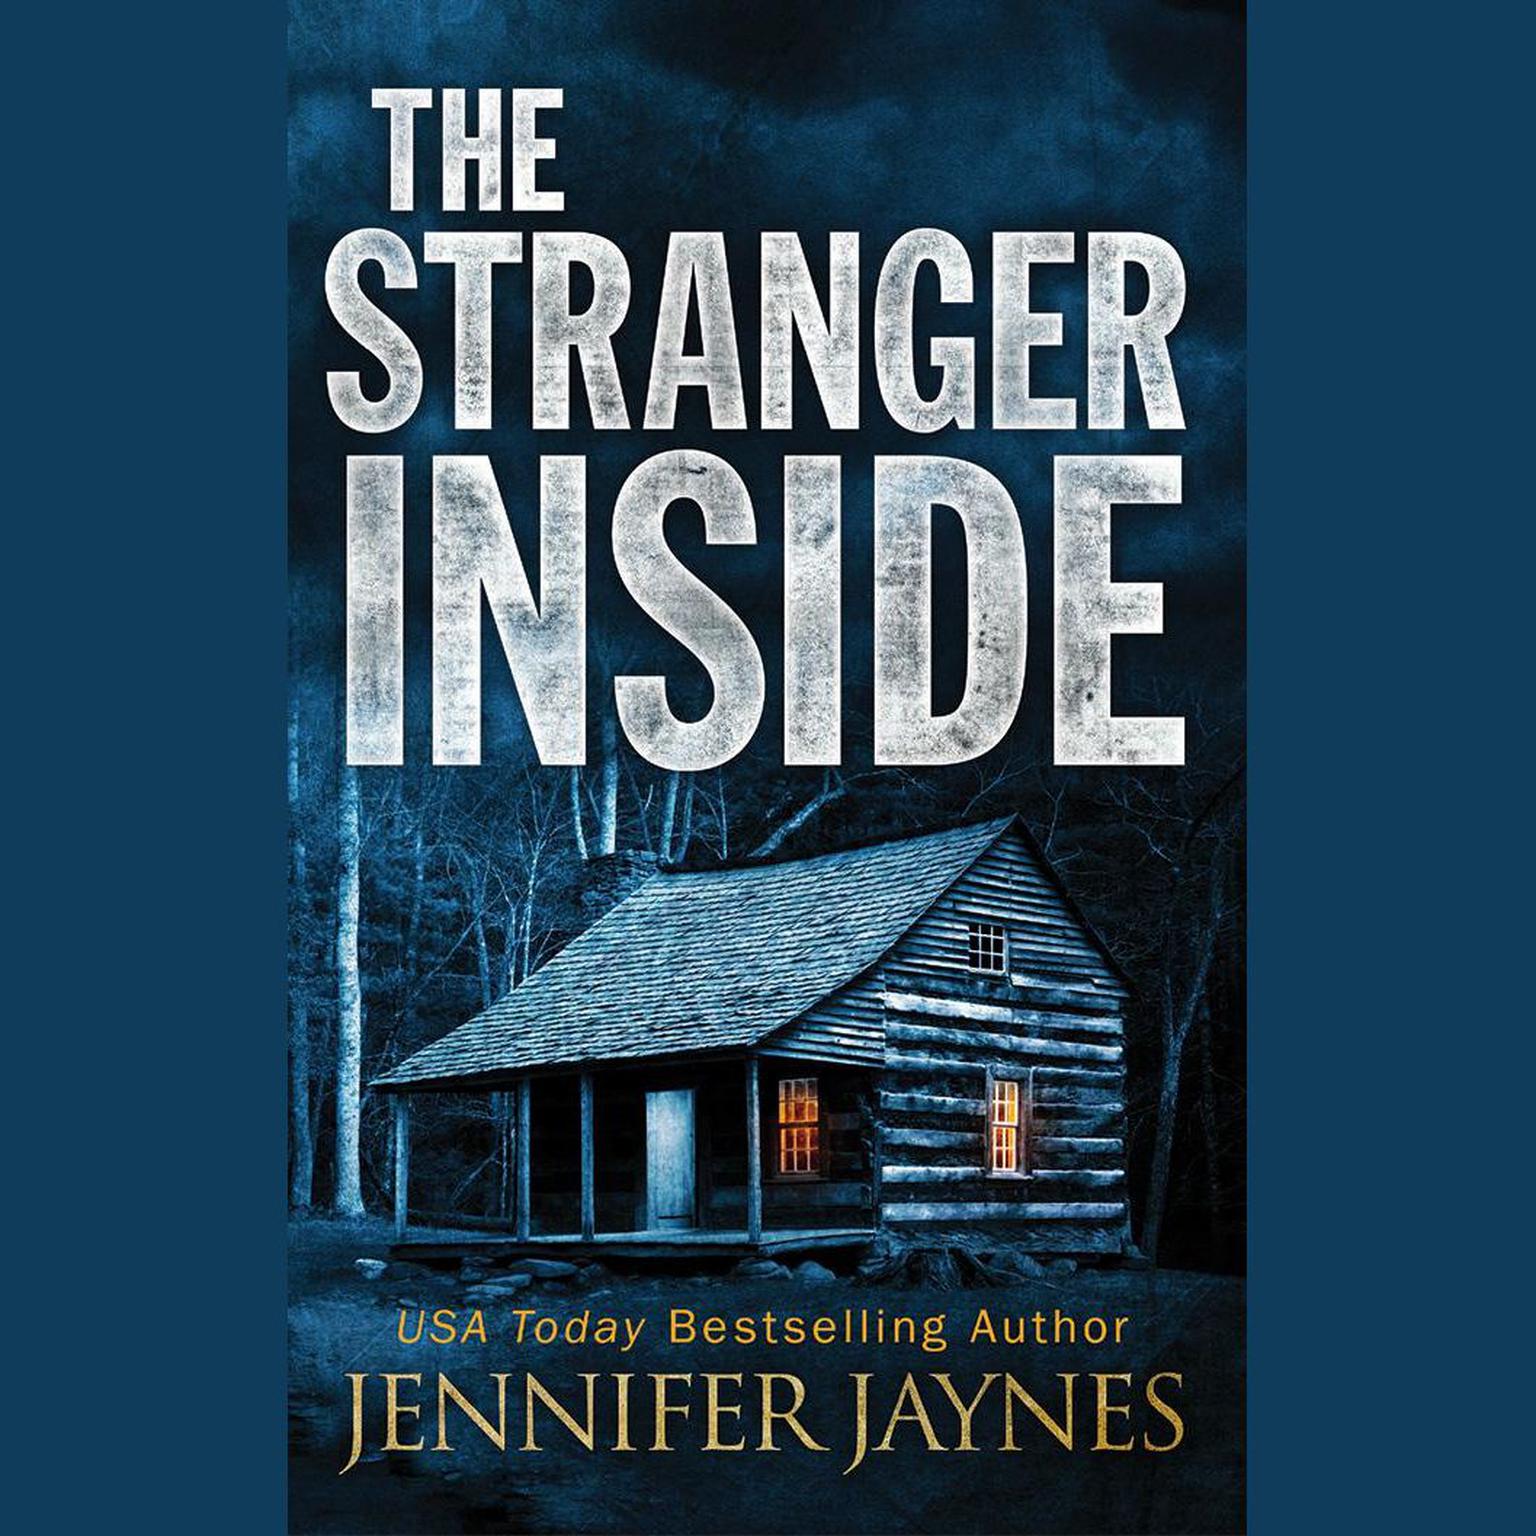 The Stranger Inside Audiobook, by Jennifer Jaynes